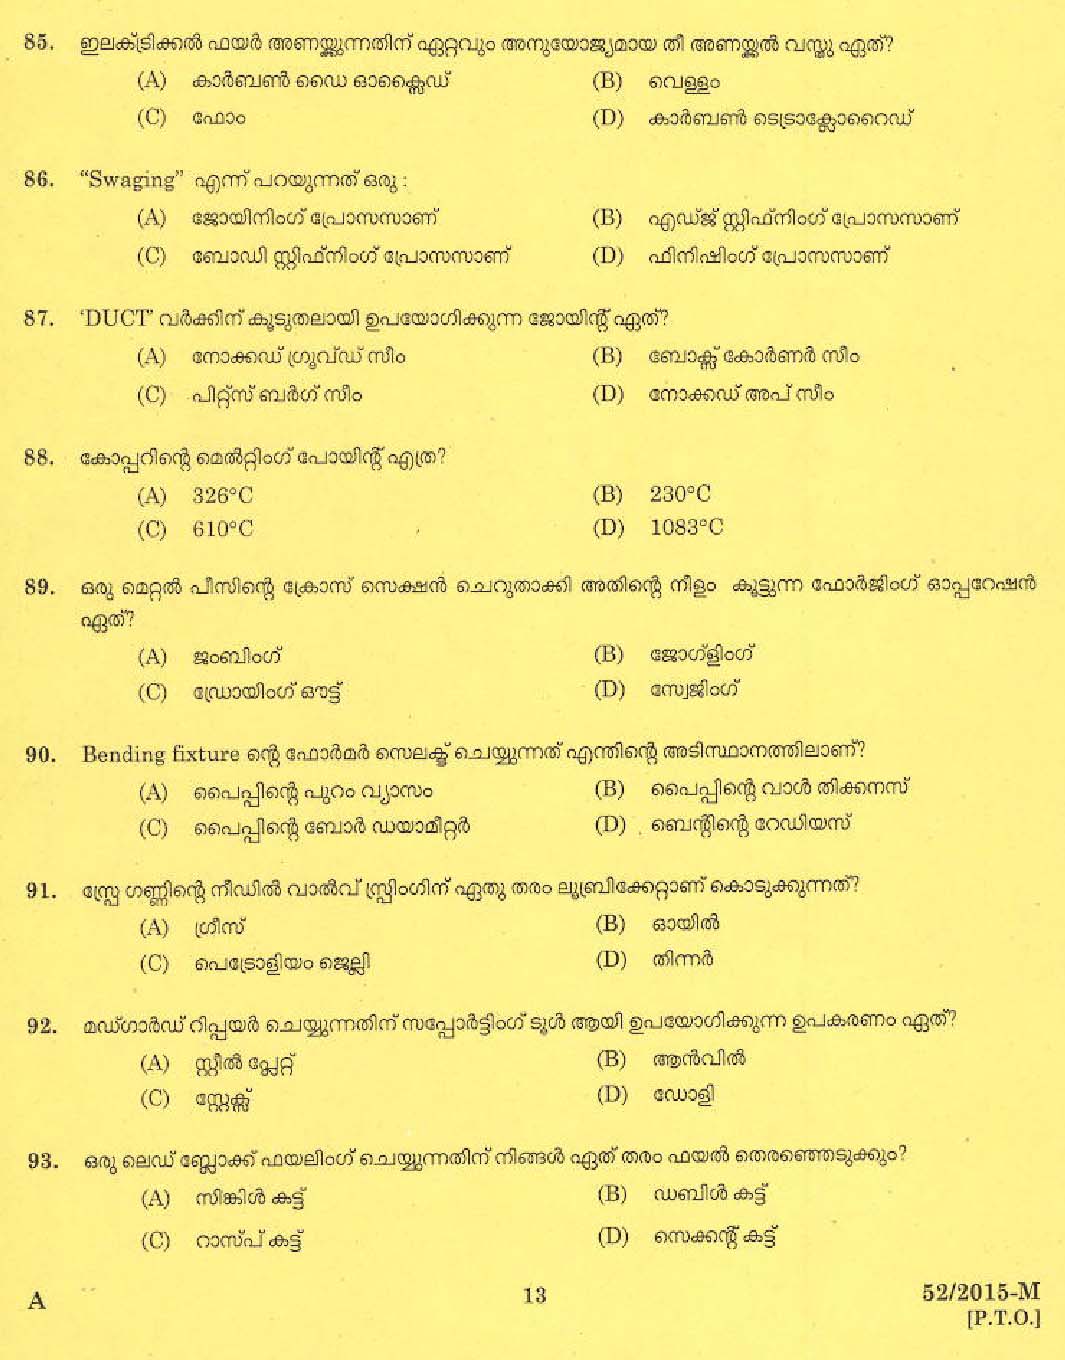 KPSC Tradesman Sheet Metal Exam 2015 Code 522015 M 11